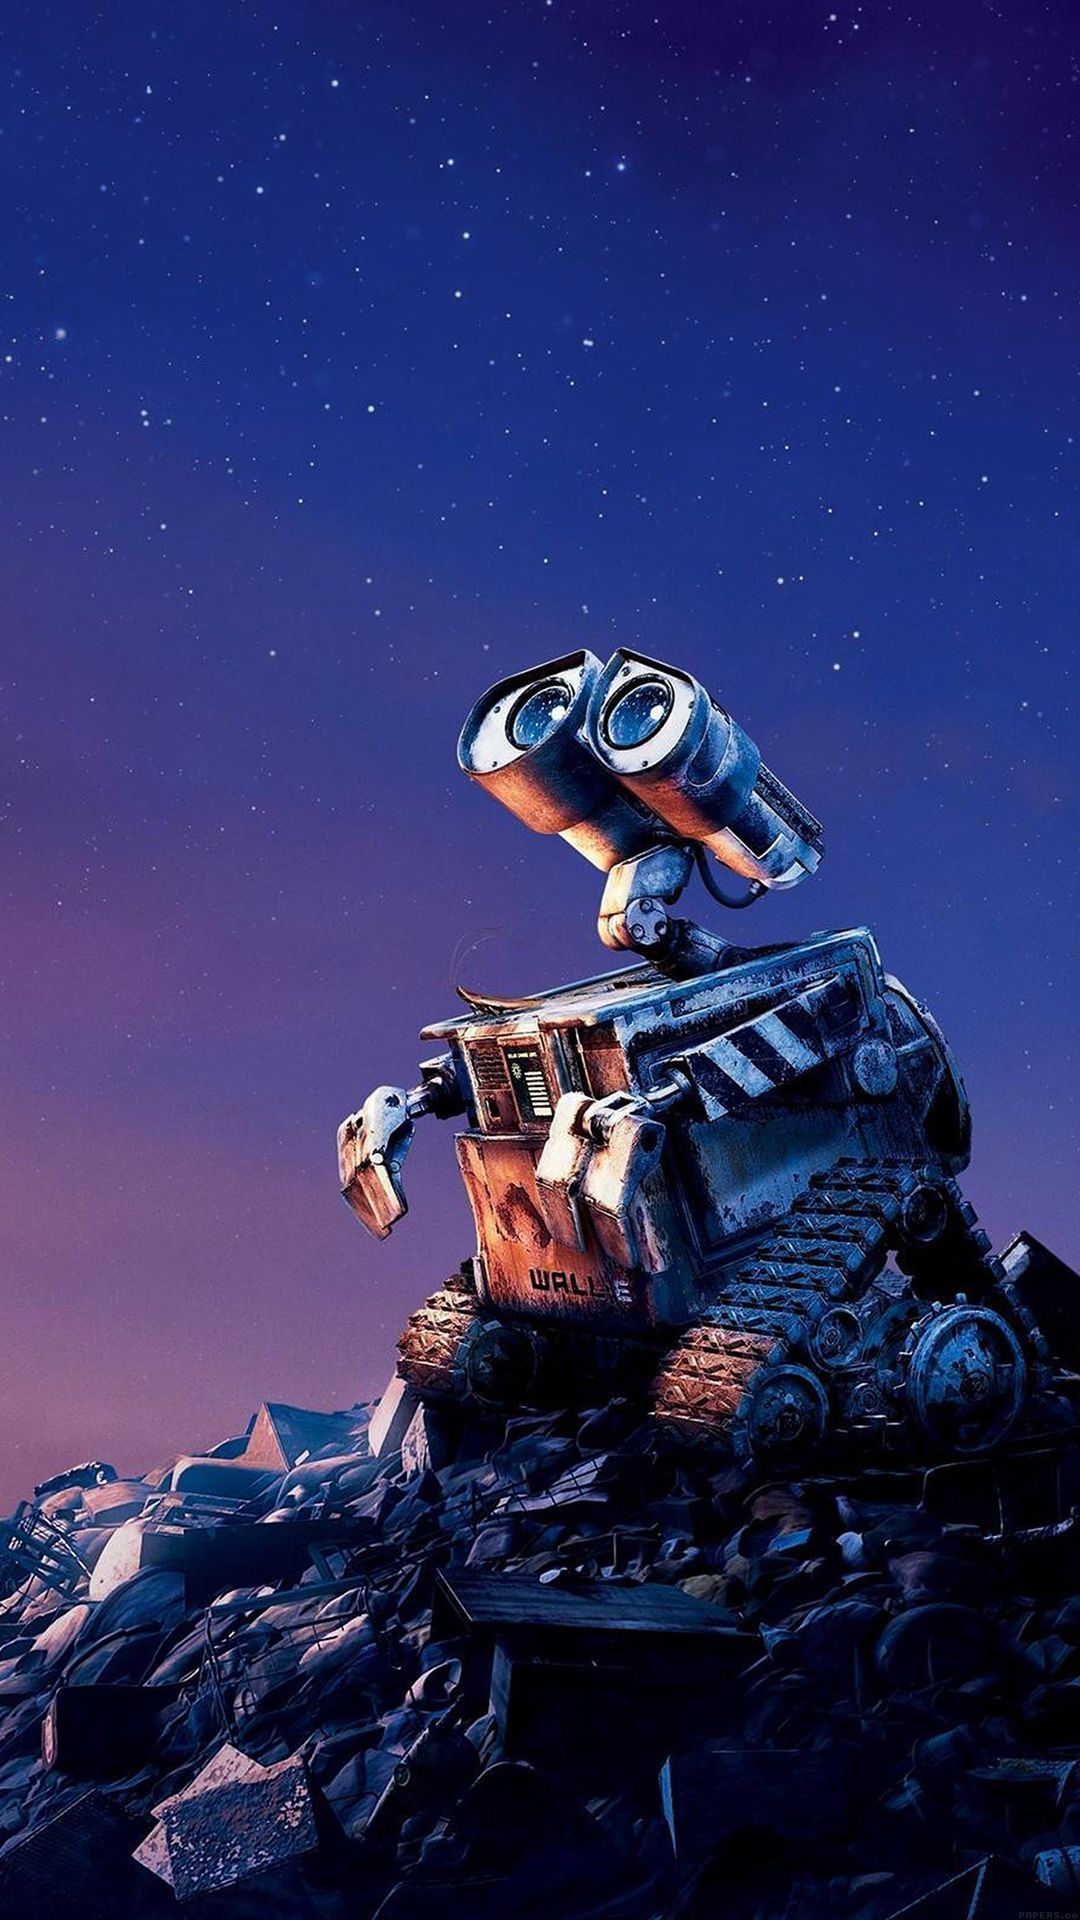 28+] WALL-E Wallpapers - WallpaperSafari